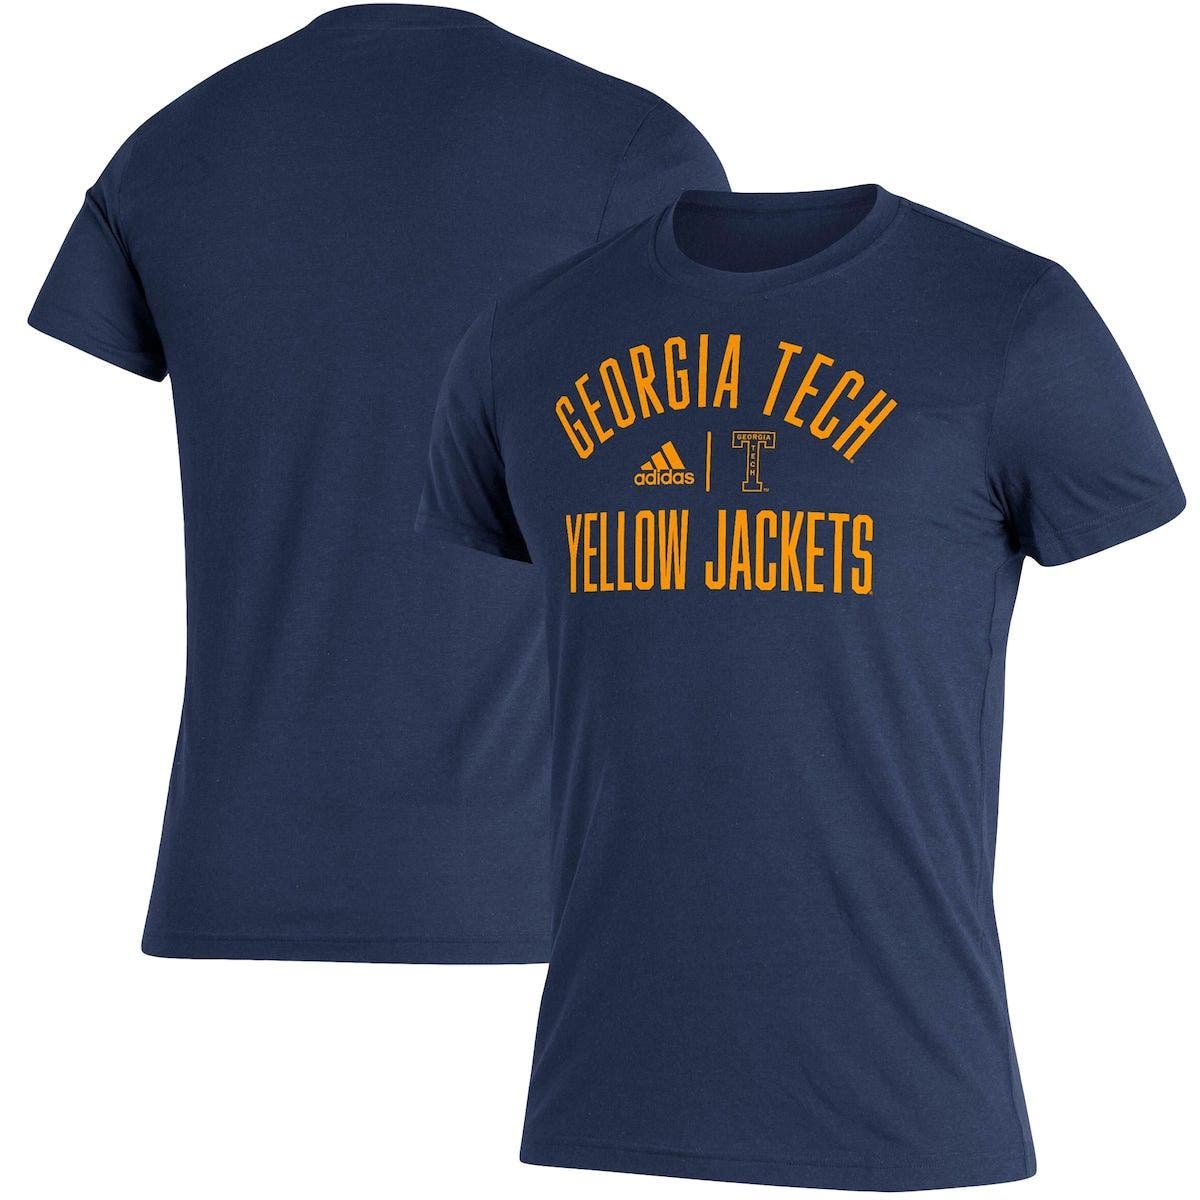 Levelwear NCAA College Georgia Tech Yellow Jackets Circular Tee T-Shirt Football Basketball 